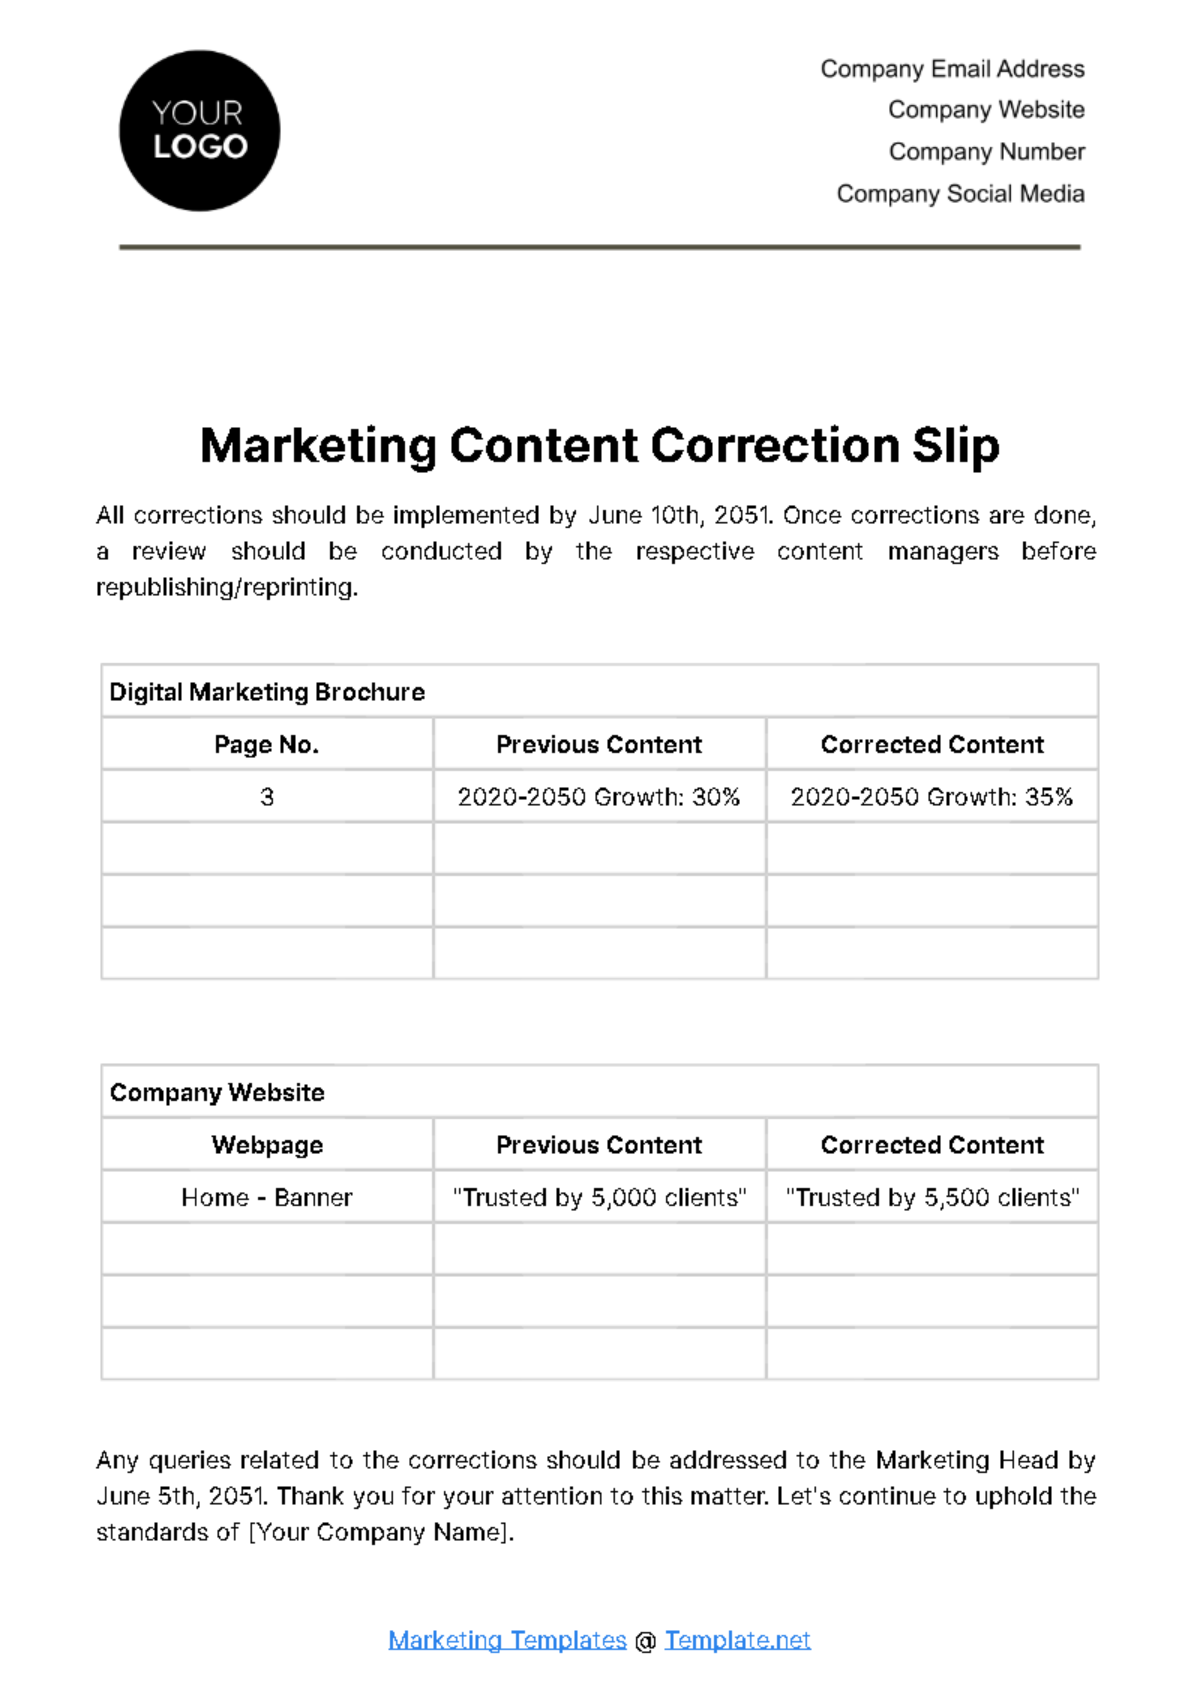 Marketing Content Correction Slip Template